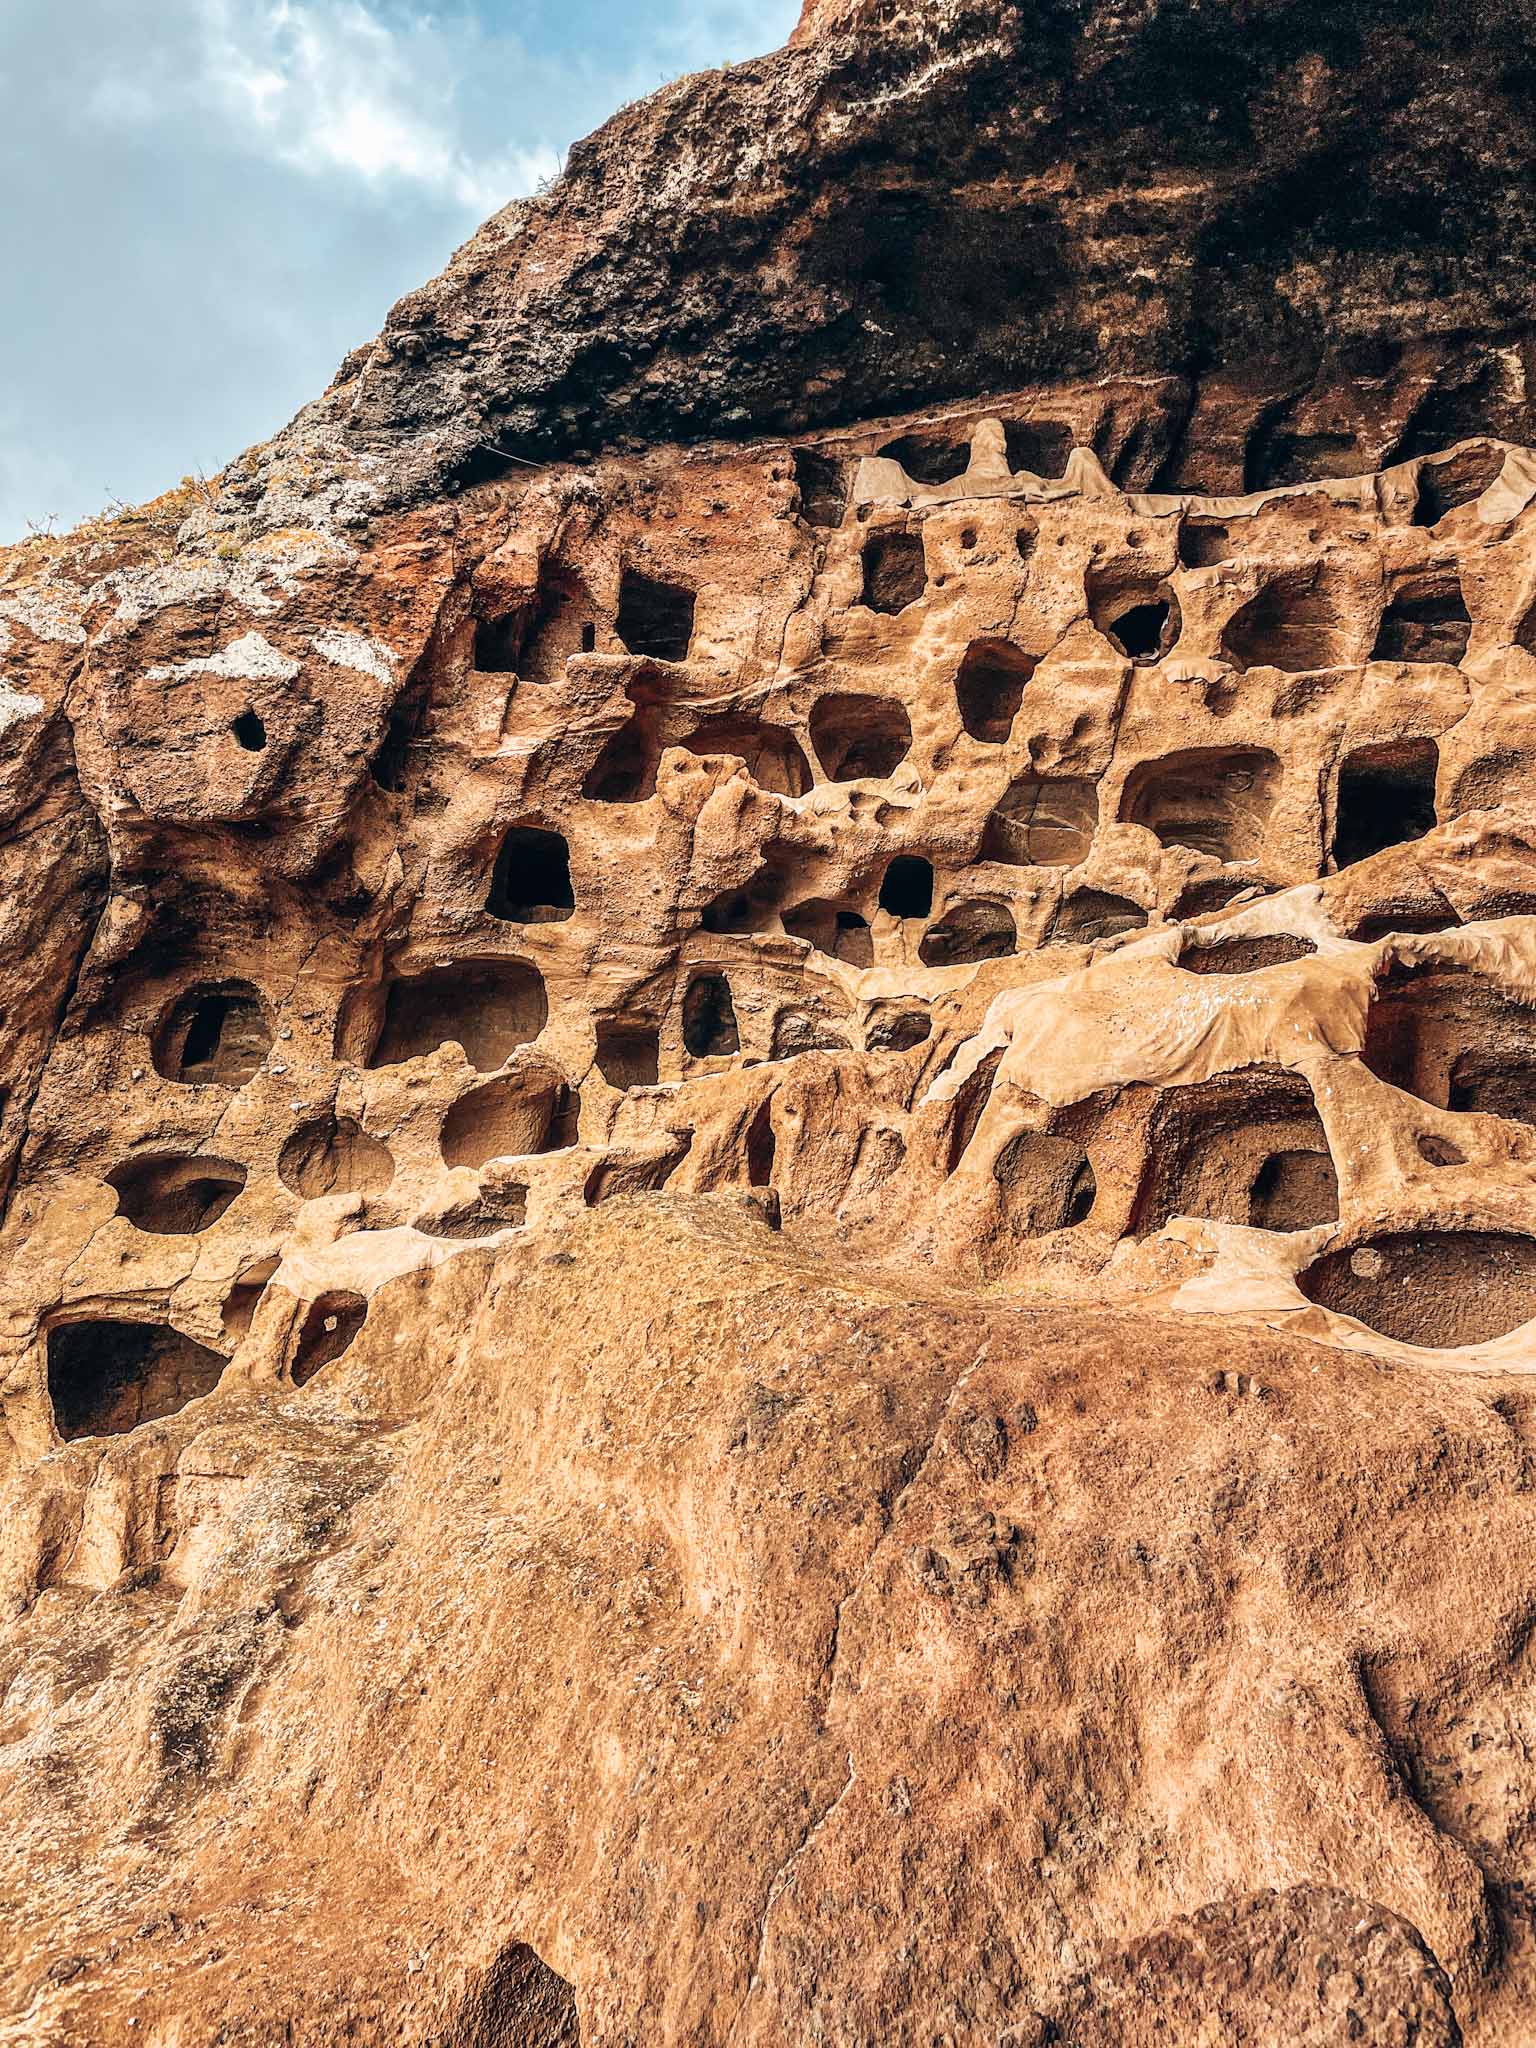 Caves of Valeron in Gran Canaria